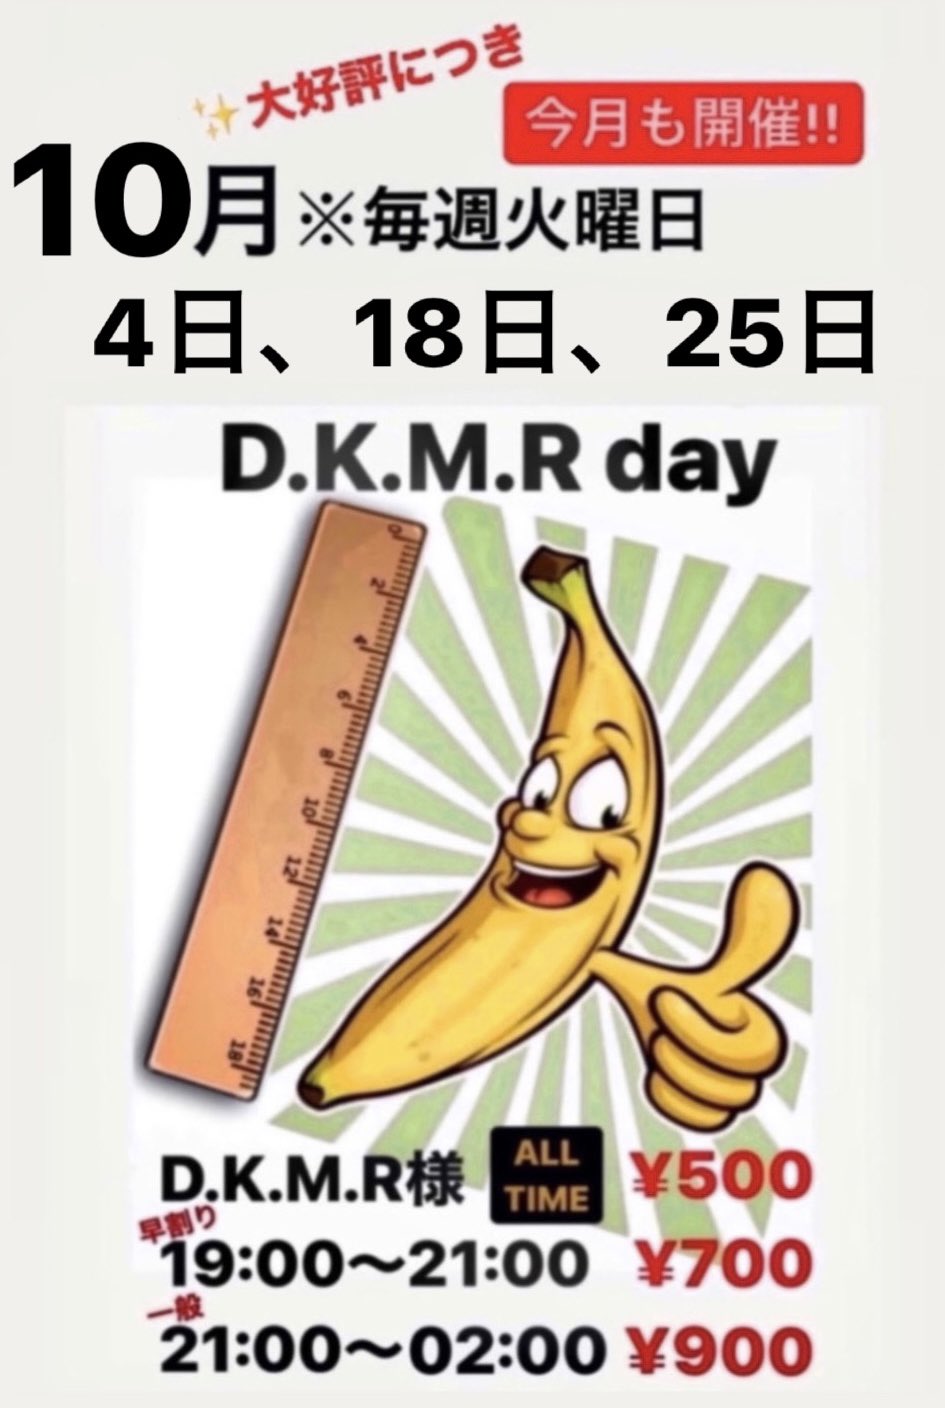 D.K.M.R day